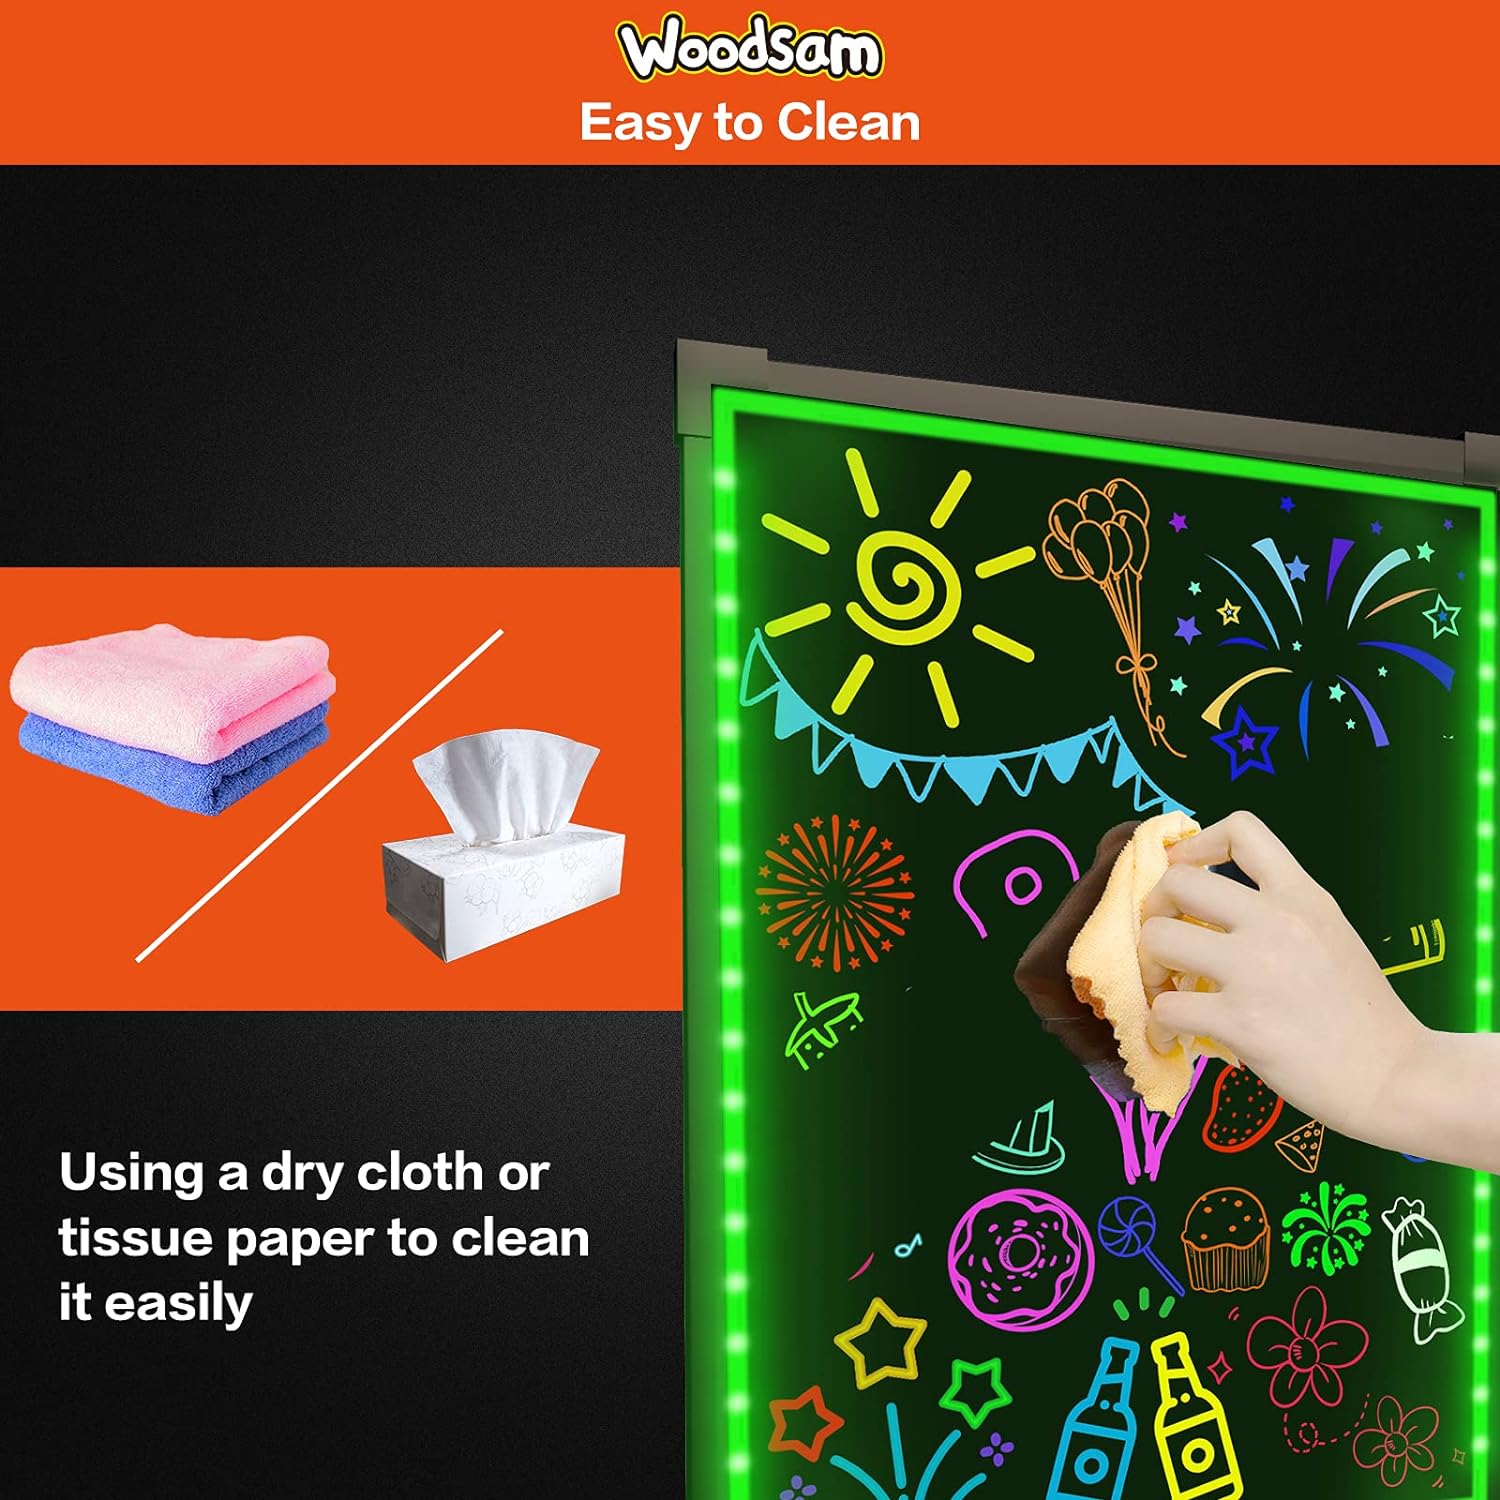 Woodsam LED Drawing Painting Board - 24 x 16 Erasable Non Porous Gla